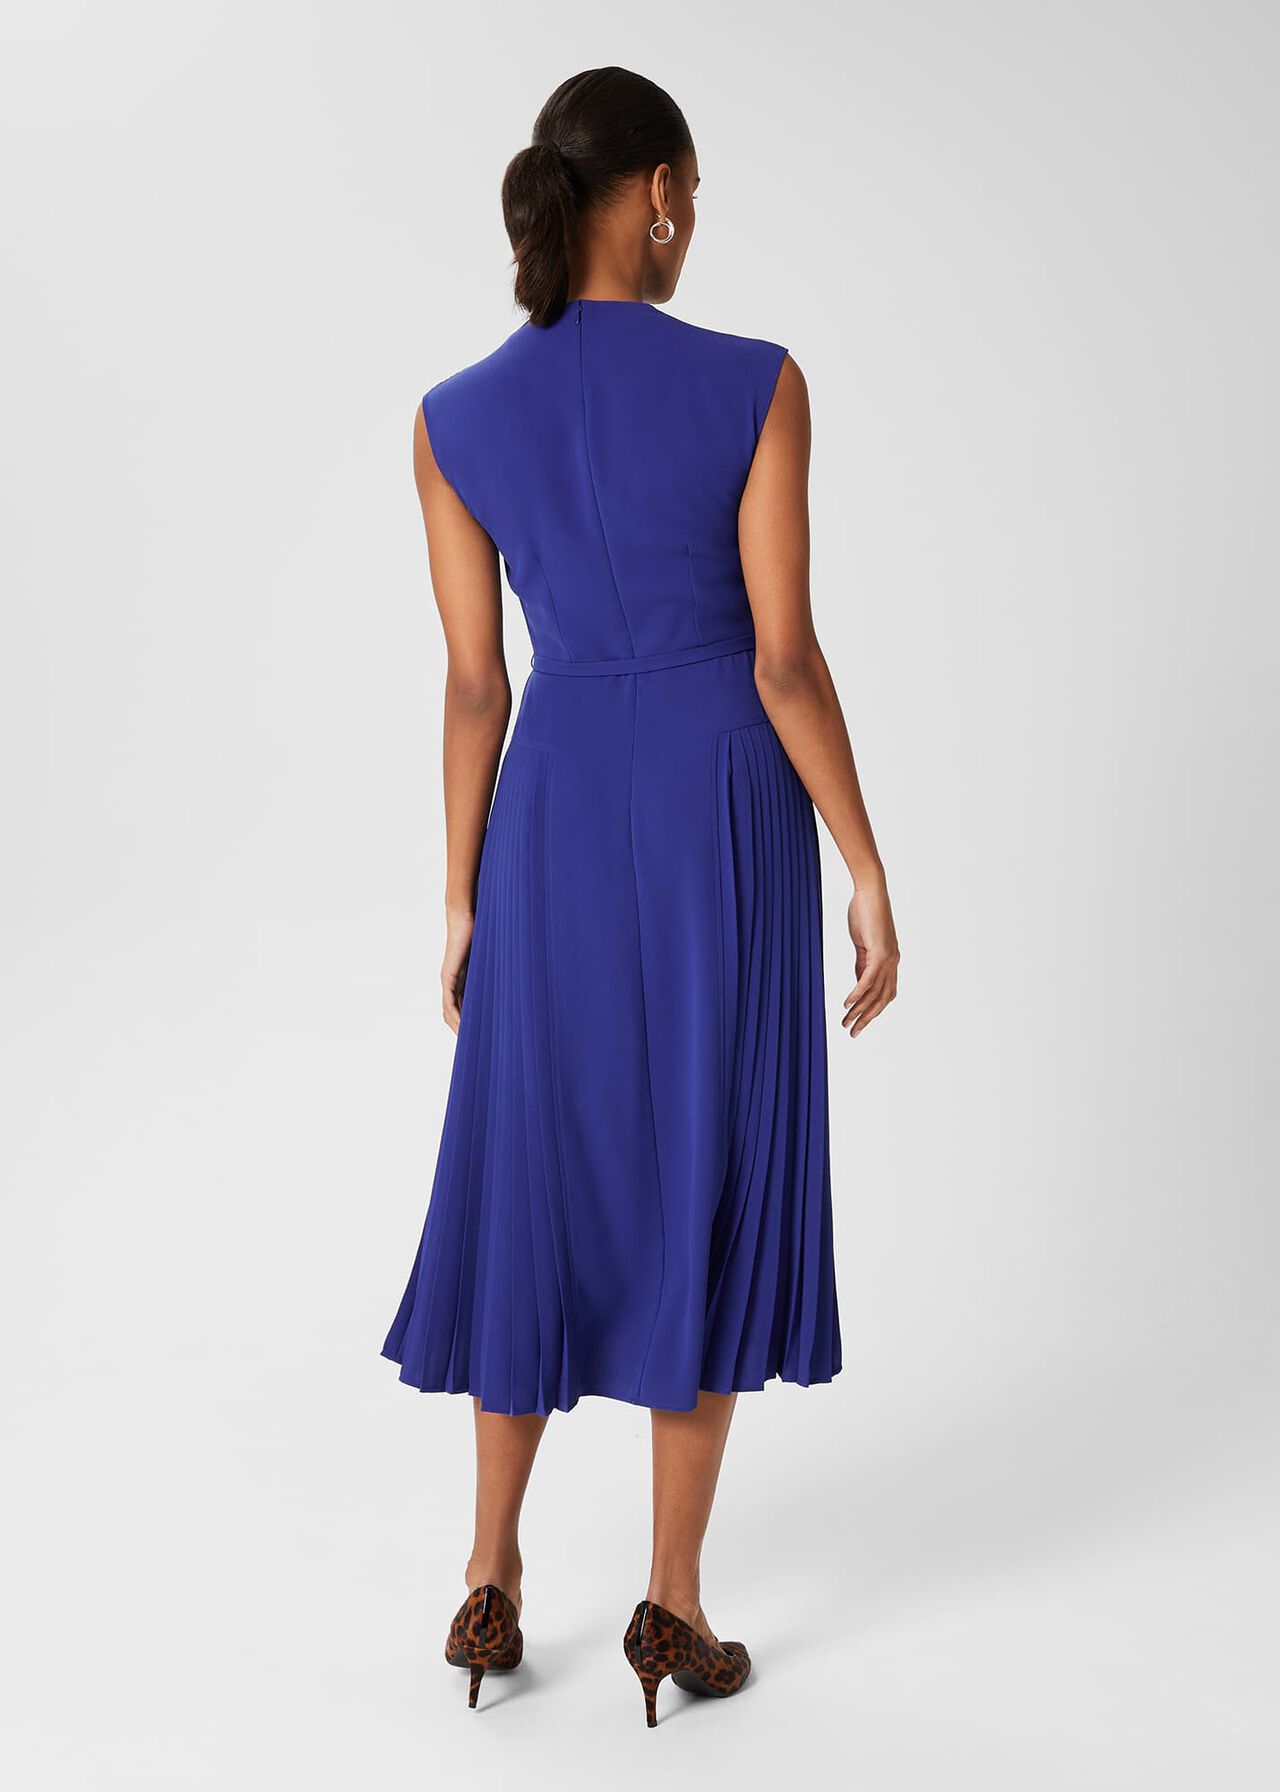 Sierra Dress, Cobalt Blue, hi-res